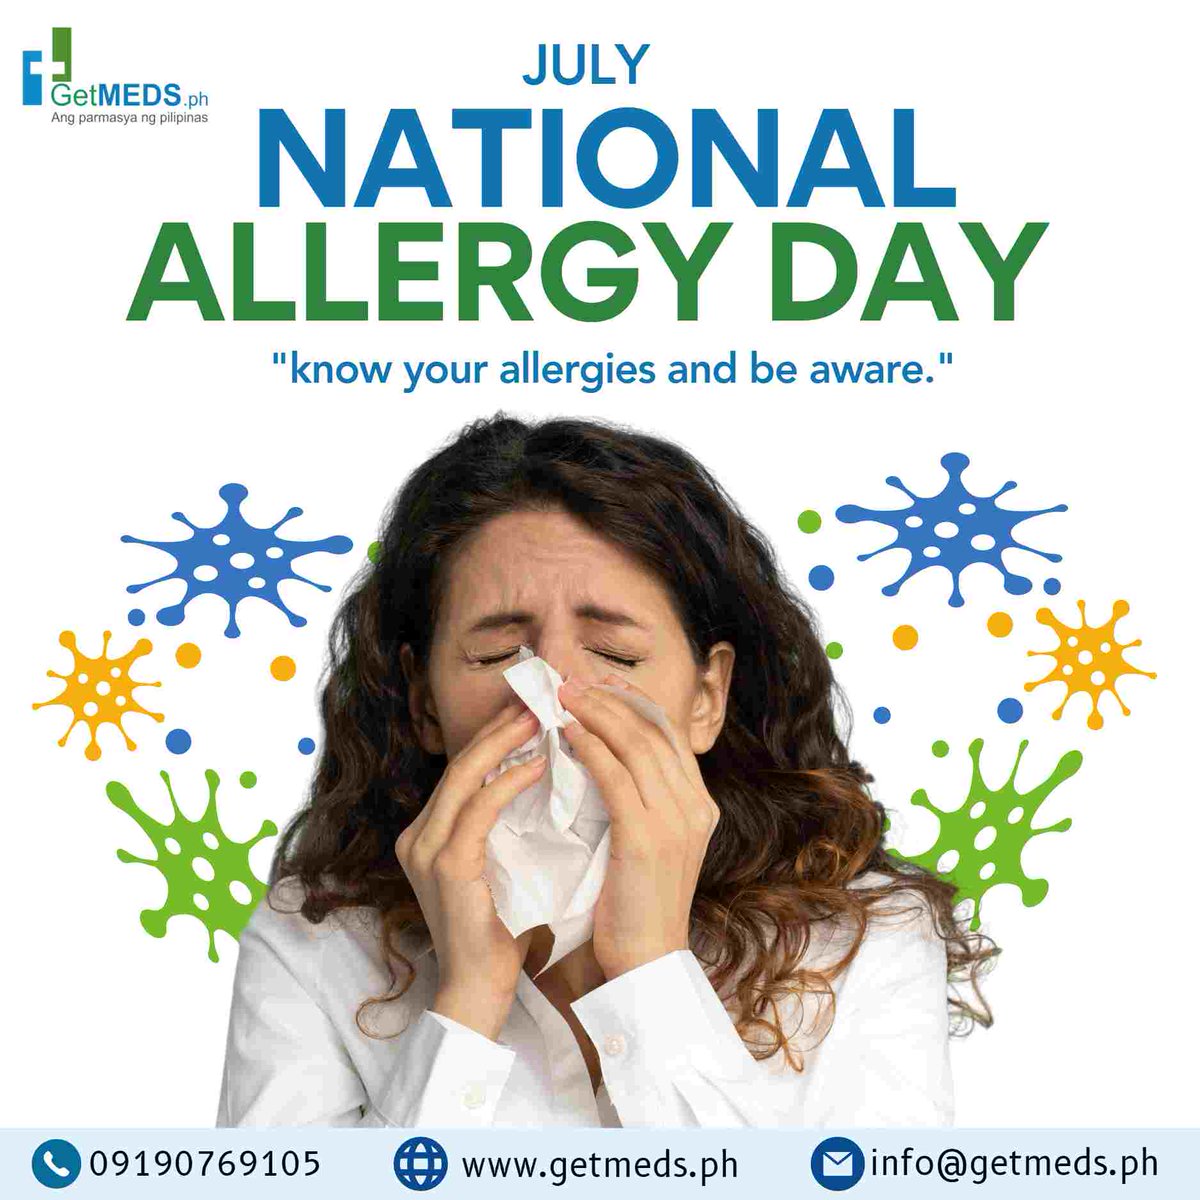 𝐉𝐮𝐥𝐲 𝟖 𝐢𝐬 𝗡𝗮𝘁𝗶𝗼𝗻𝗮𝗹 𝗔𝗹𝗹𝗲𝗿𝗴𝘆 𝗗𝗮𝘆!
Know your allergies and be aware.

#NationalAllergyDay #SupportAndUnderstanding #AllergyAwareness #SupportAllergySufferers #getmeds